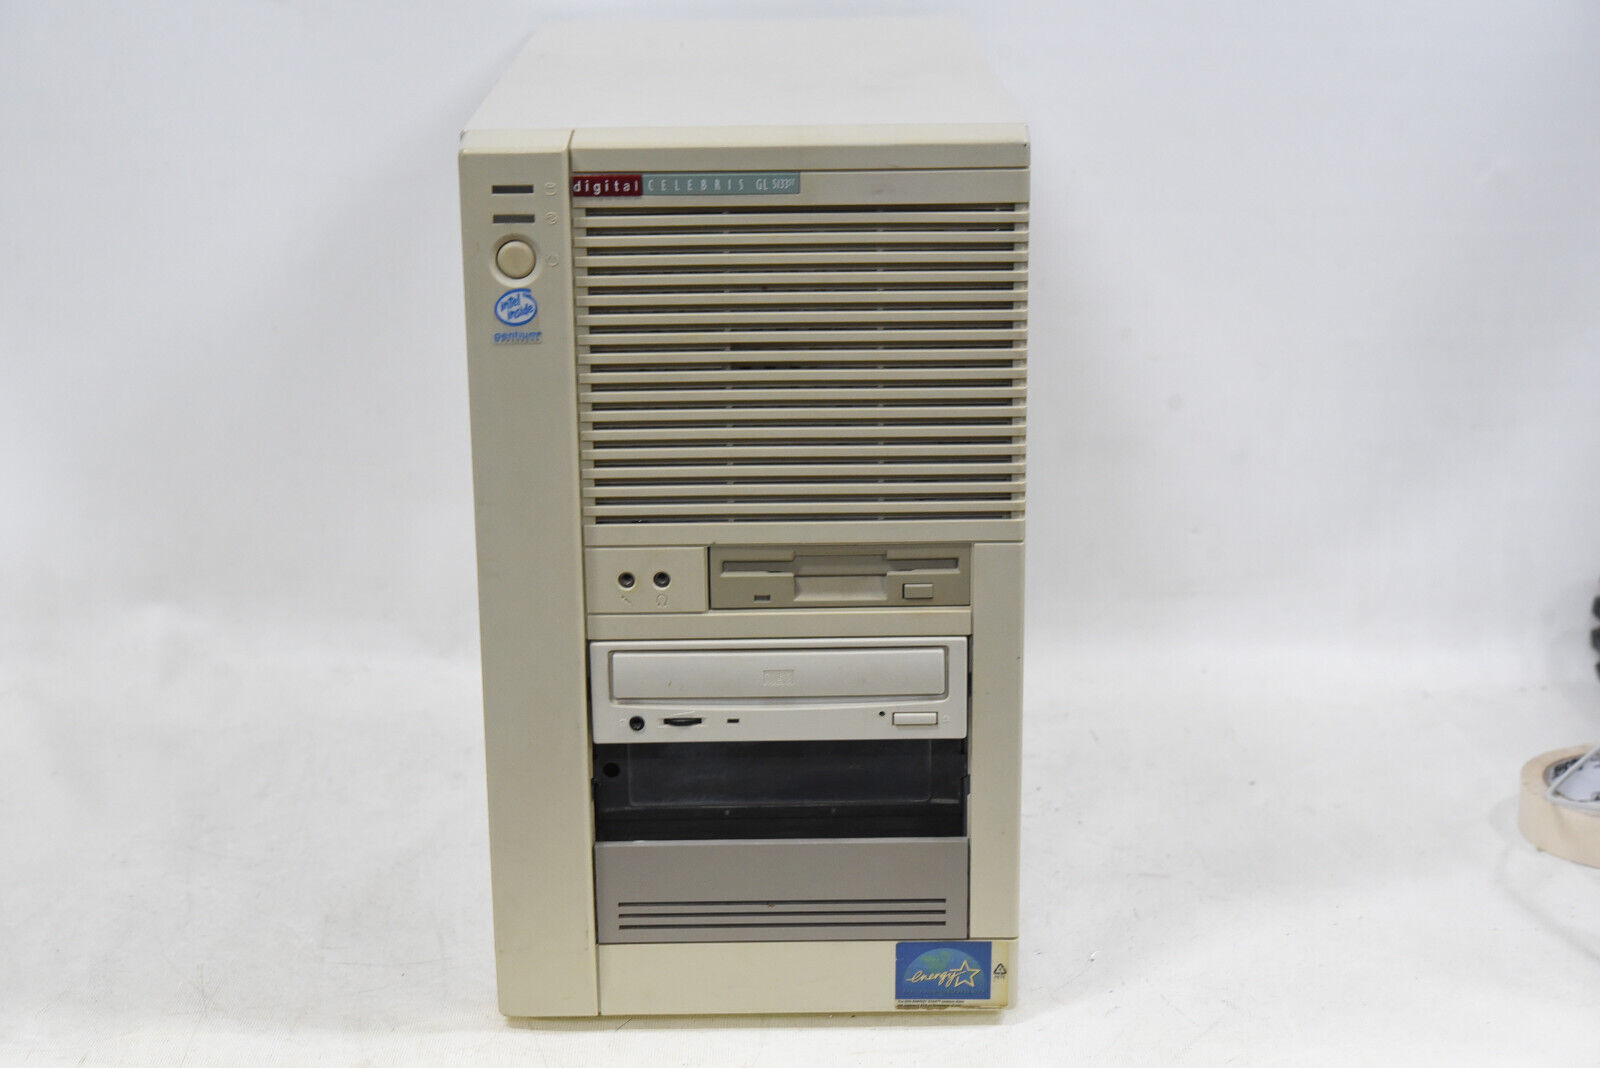 Digital Celebris GL-5133-ST Intel Pentium 133MHz Vintage Desktop Computer 965WW